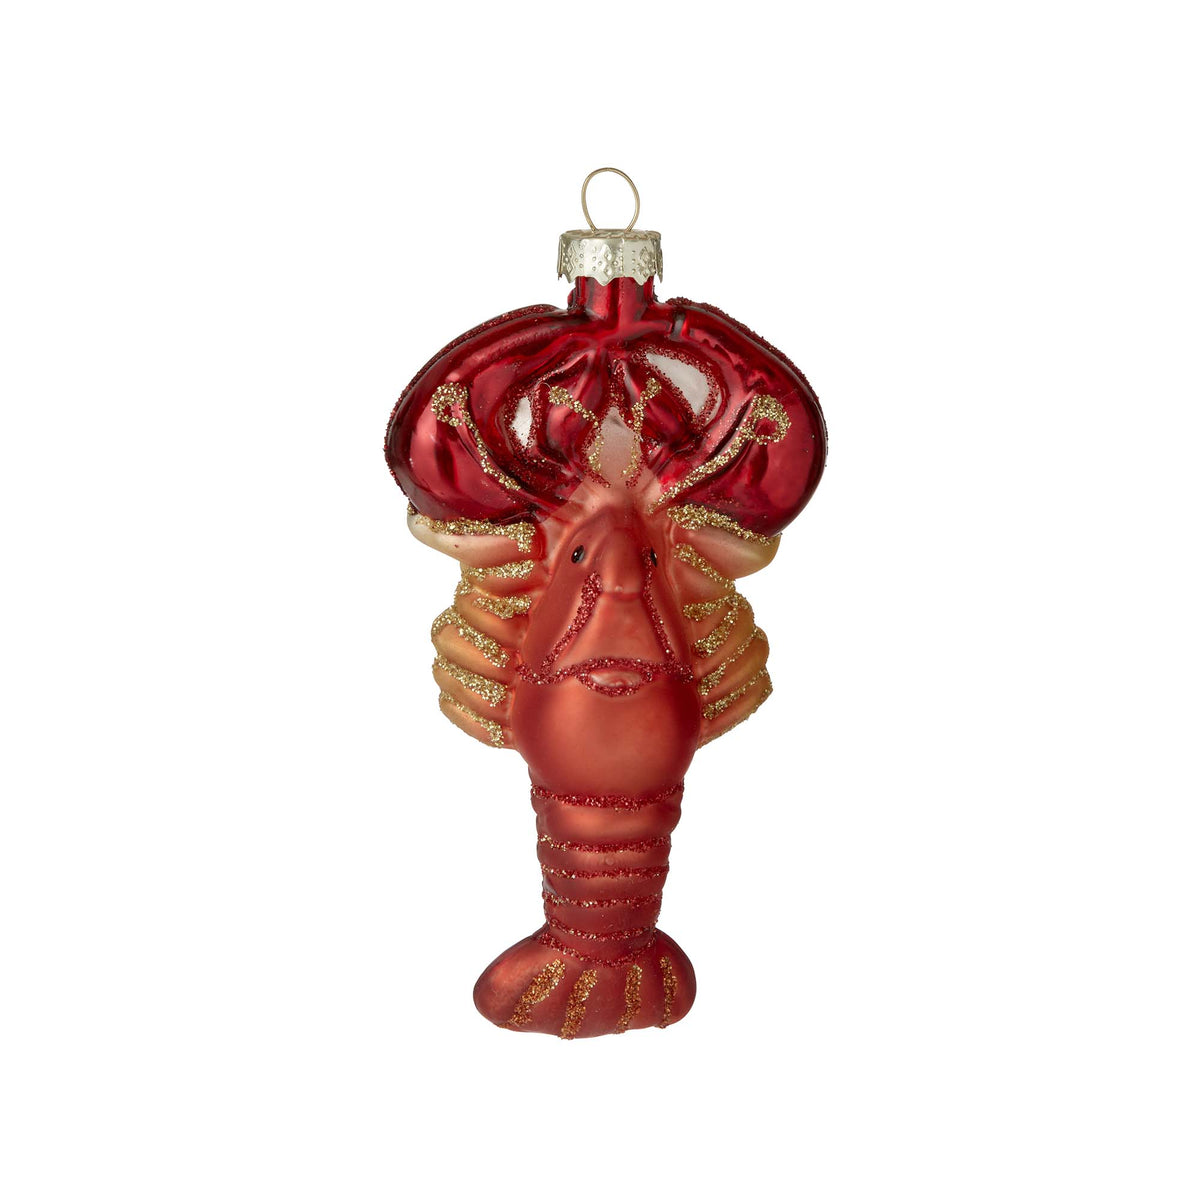 Bungalow / Xmas Ornament Lobster / Scarlet / Christbaumschmuck